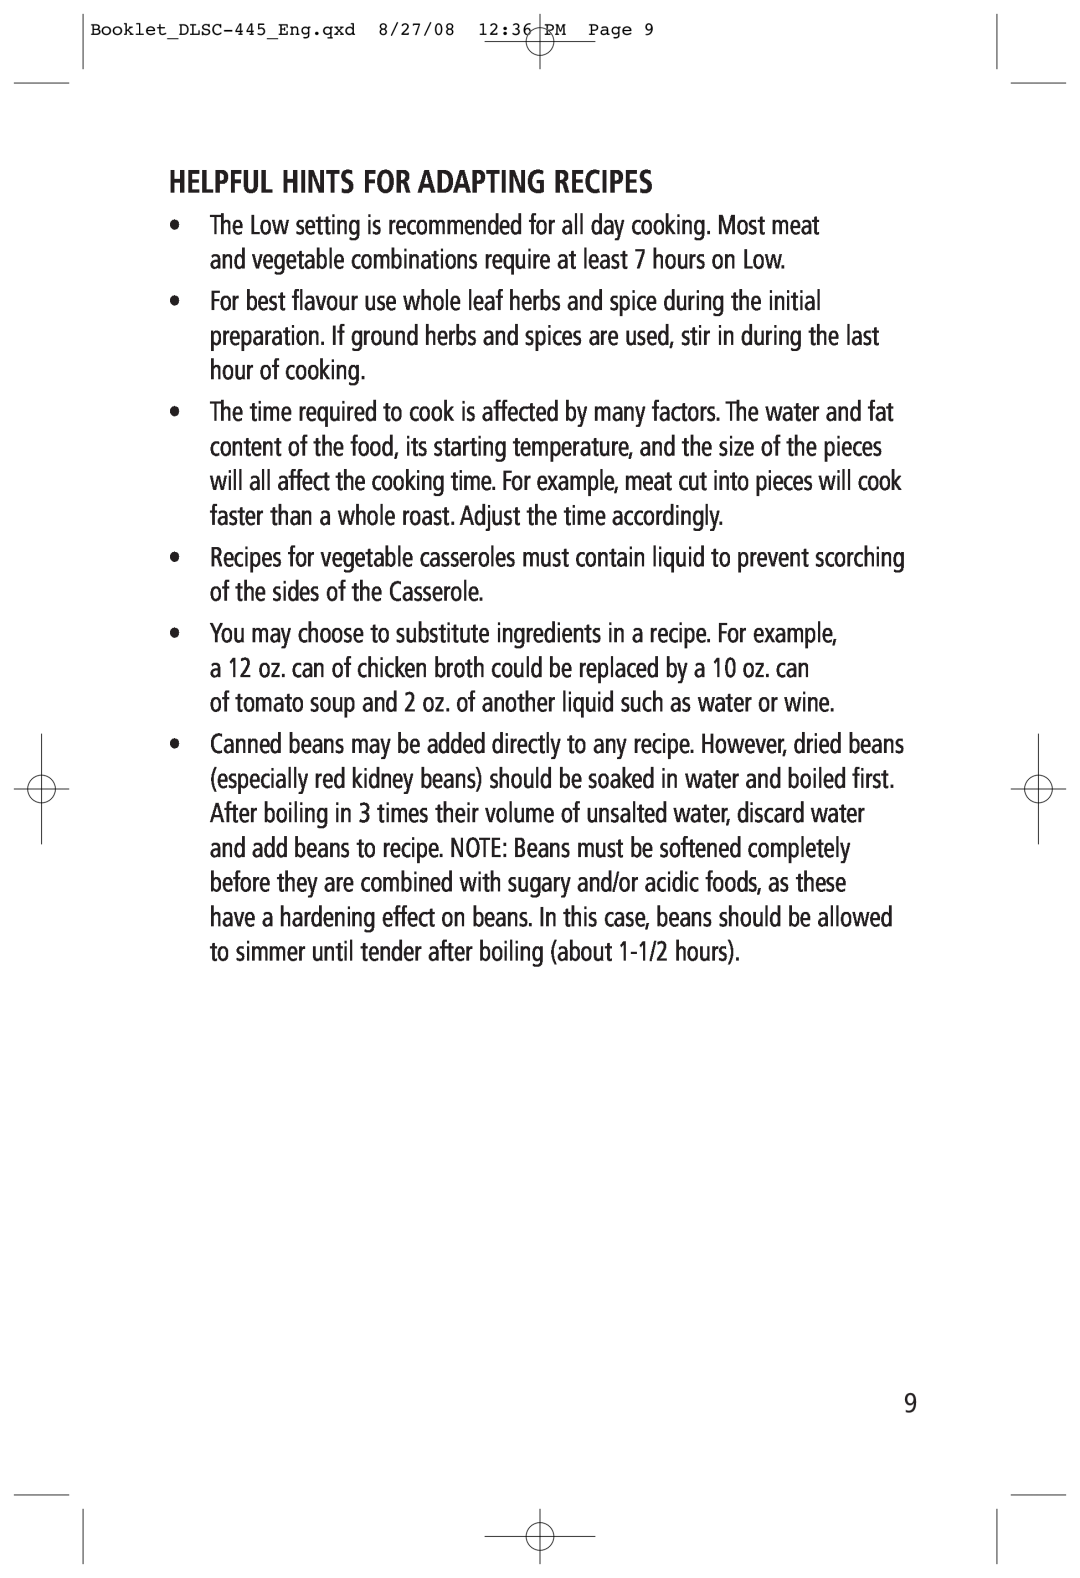 Toastess DLSC-445 manual Helpful Hints For Adapting Recipes 